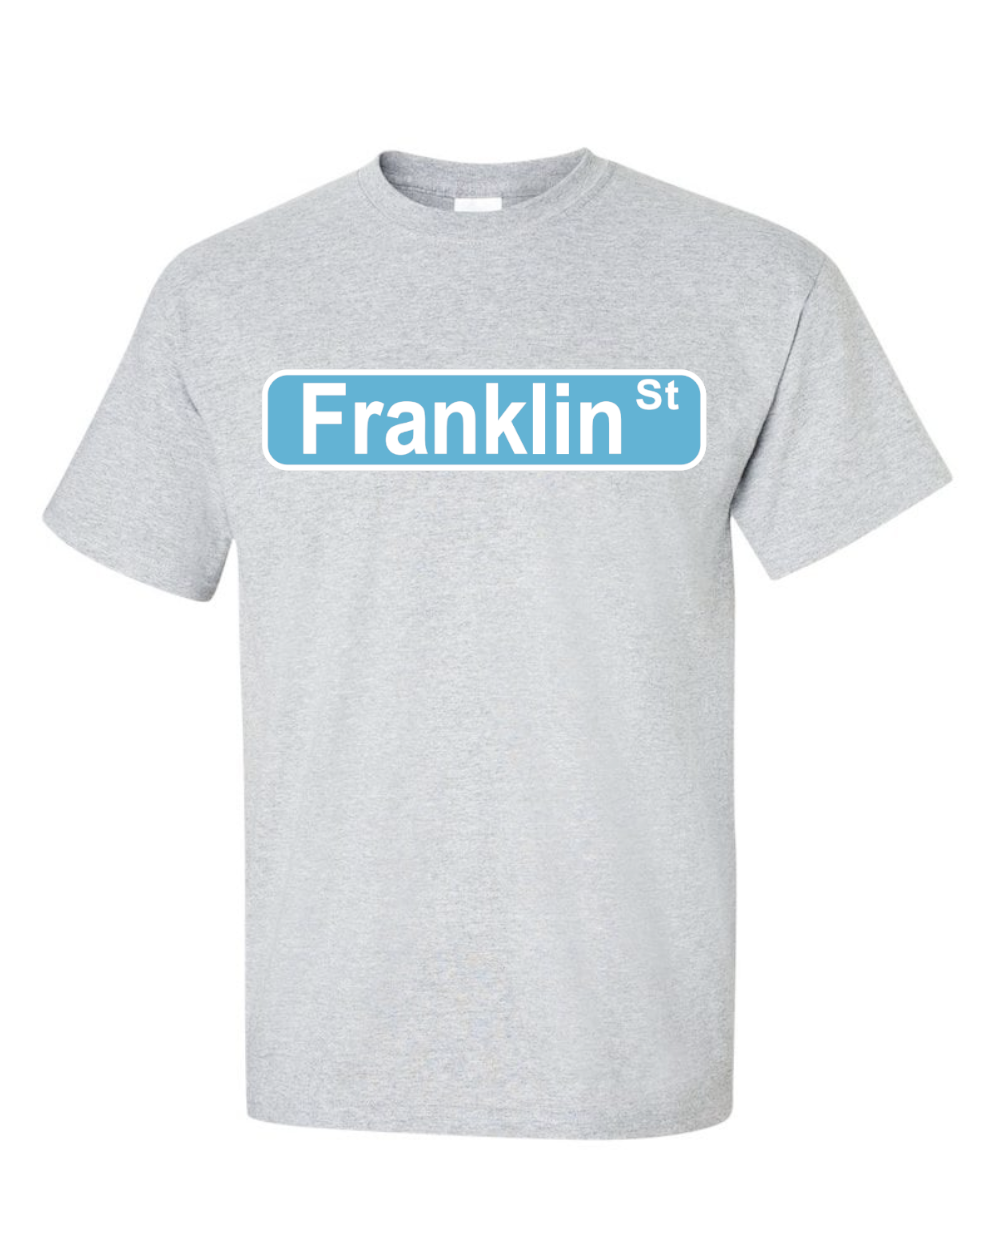 Franklin Street Adult T-shirt in Grey